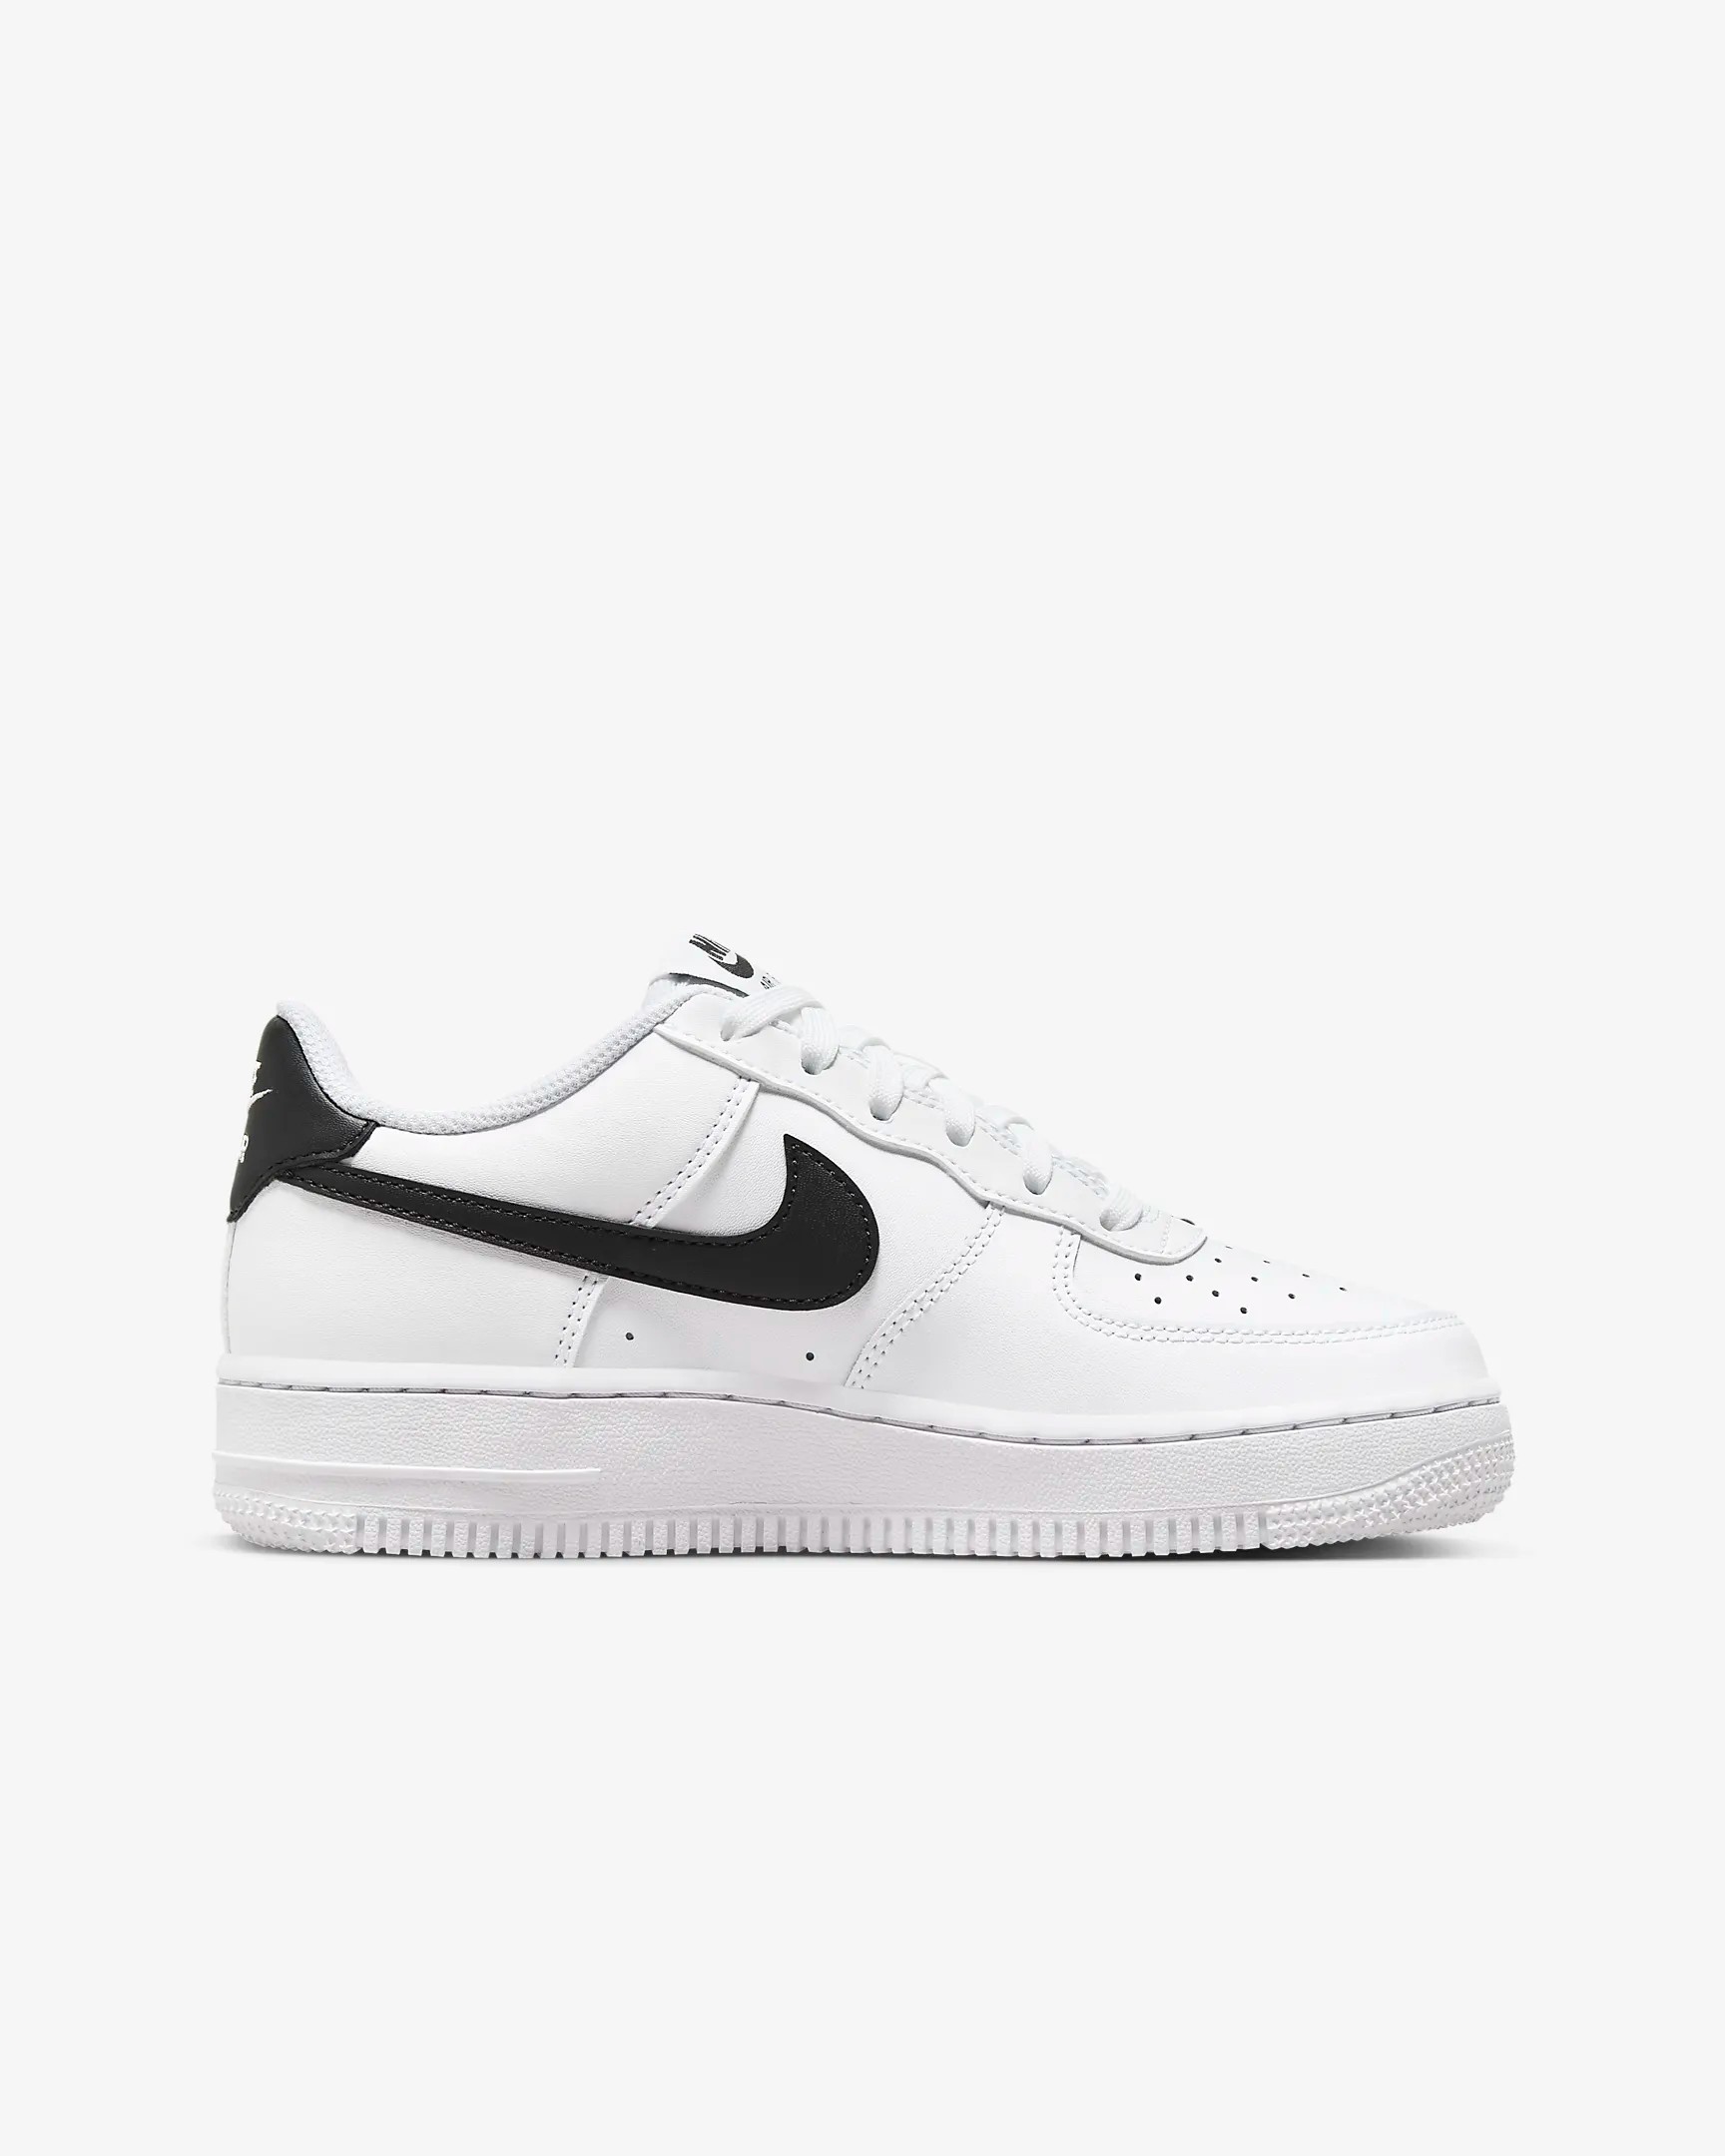 Nike Air Force 1 Low Essential White Black 